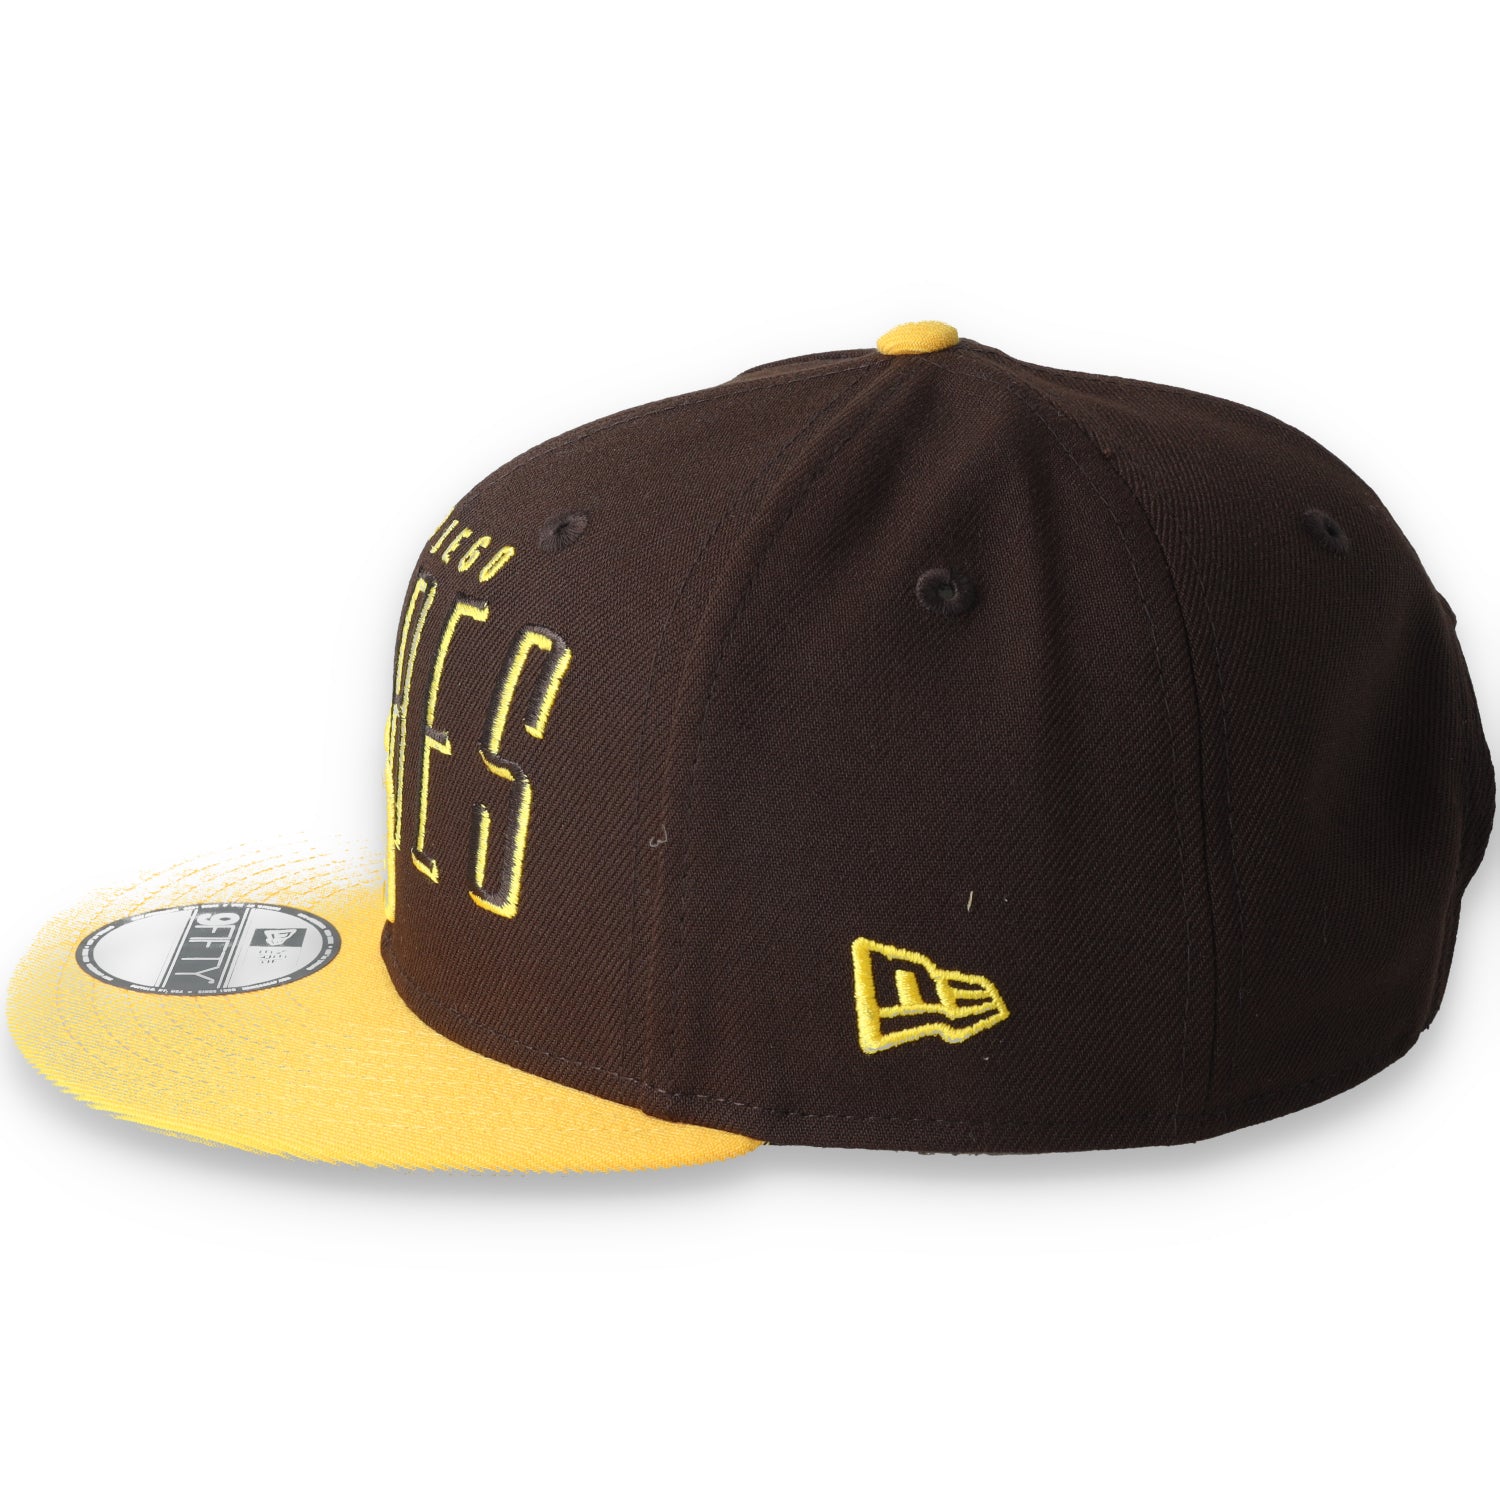 New Era San Diego Padres Headline E3 9FIFTY Snapback Hat